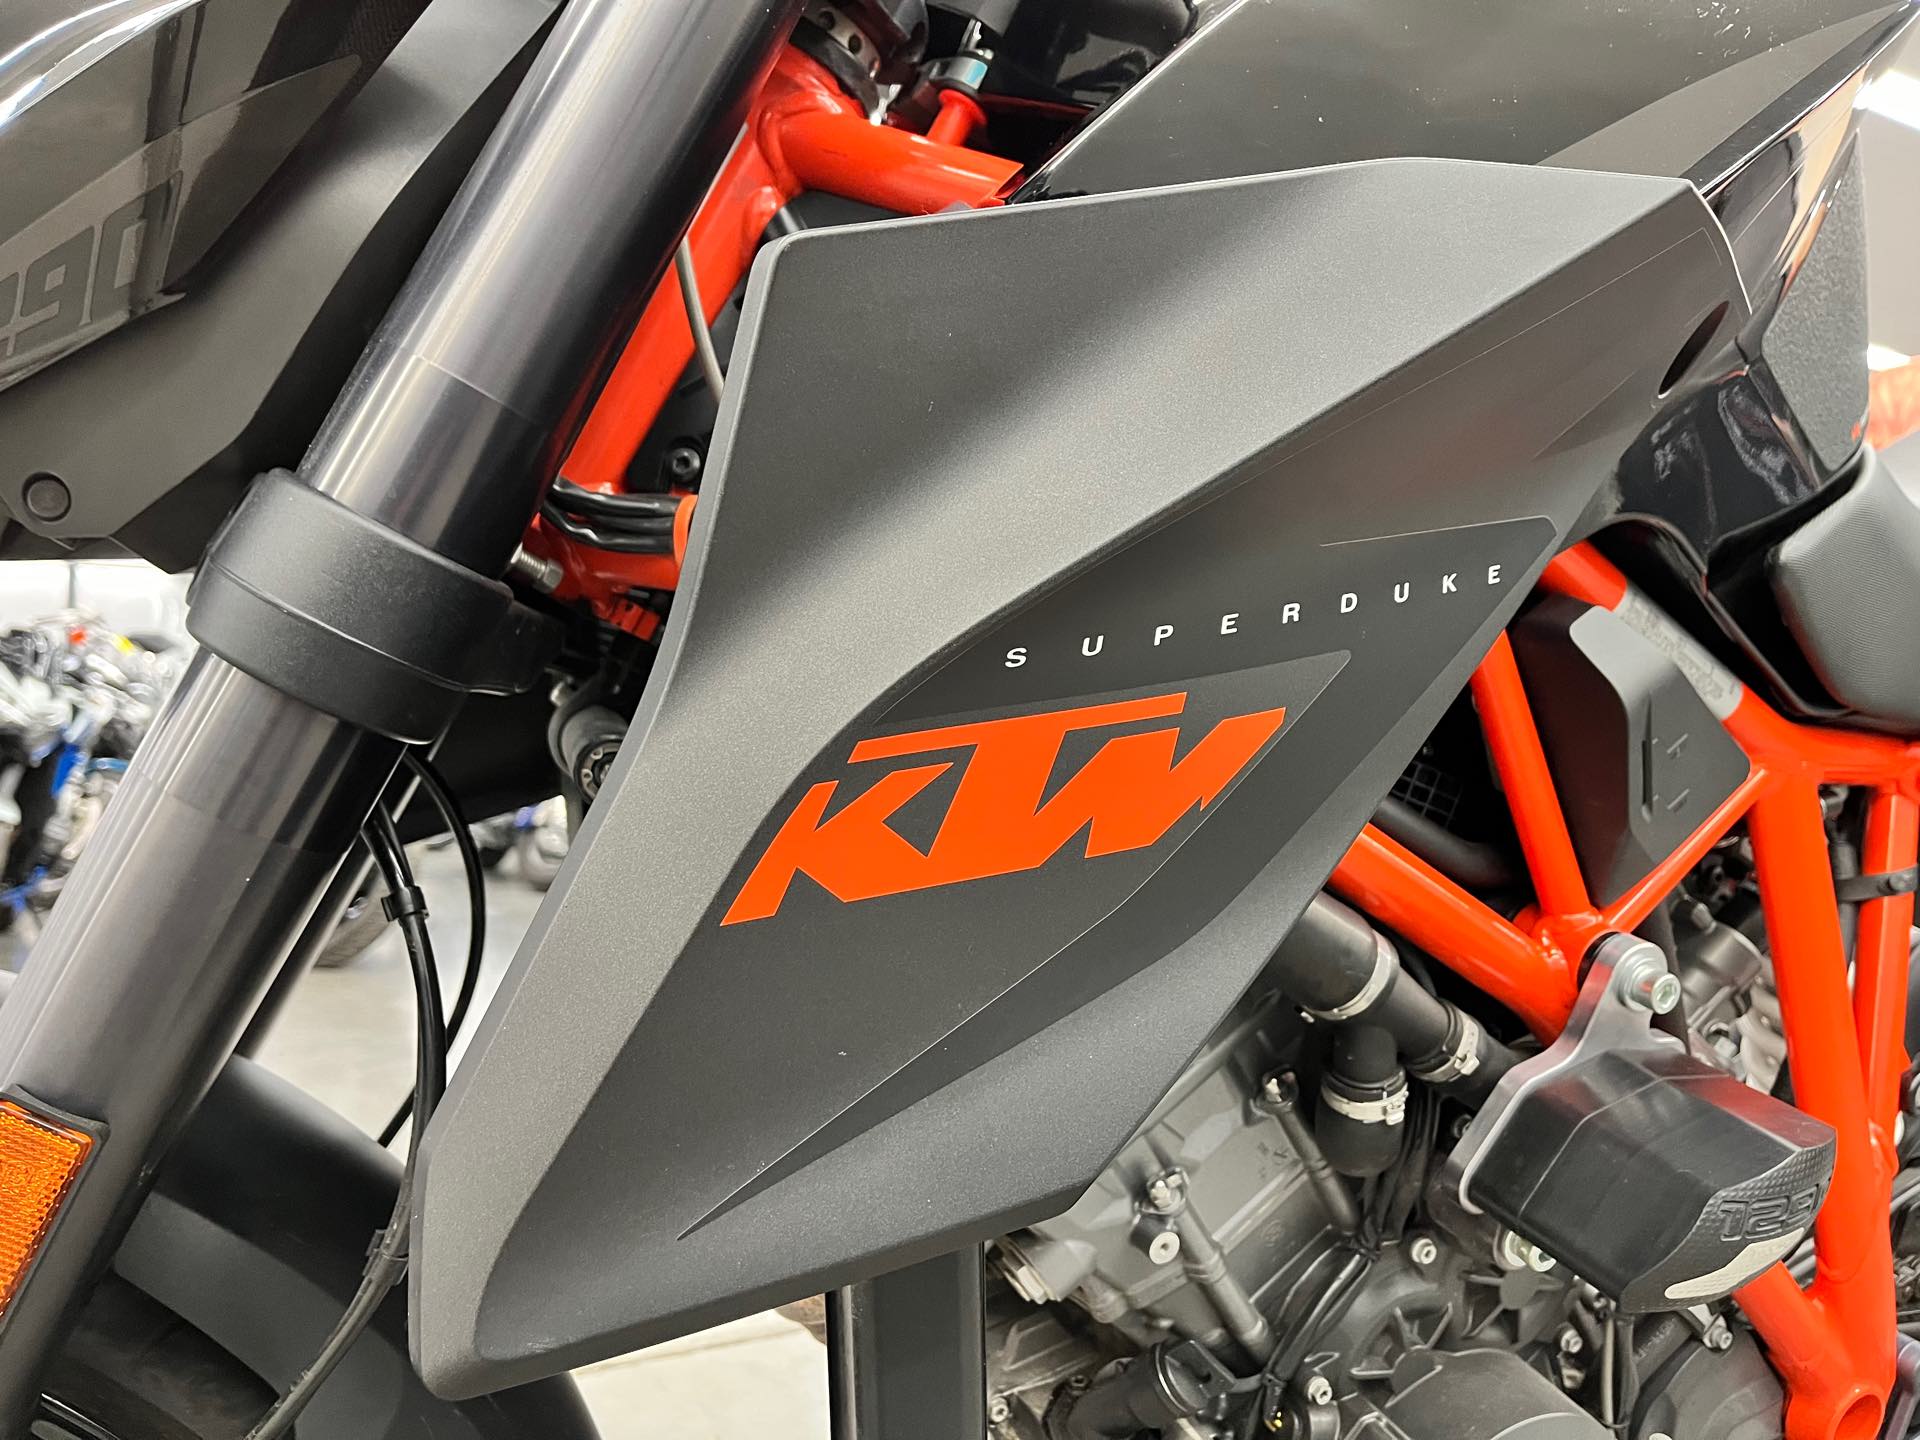 2015 KTM Super Duke 1290 R ABS at Aces Motorcycles - Denver